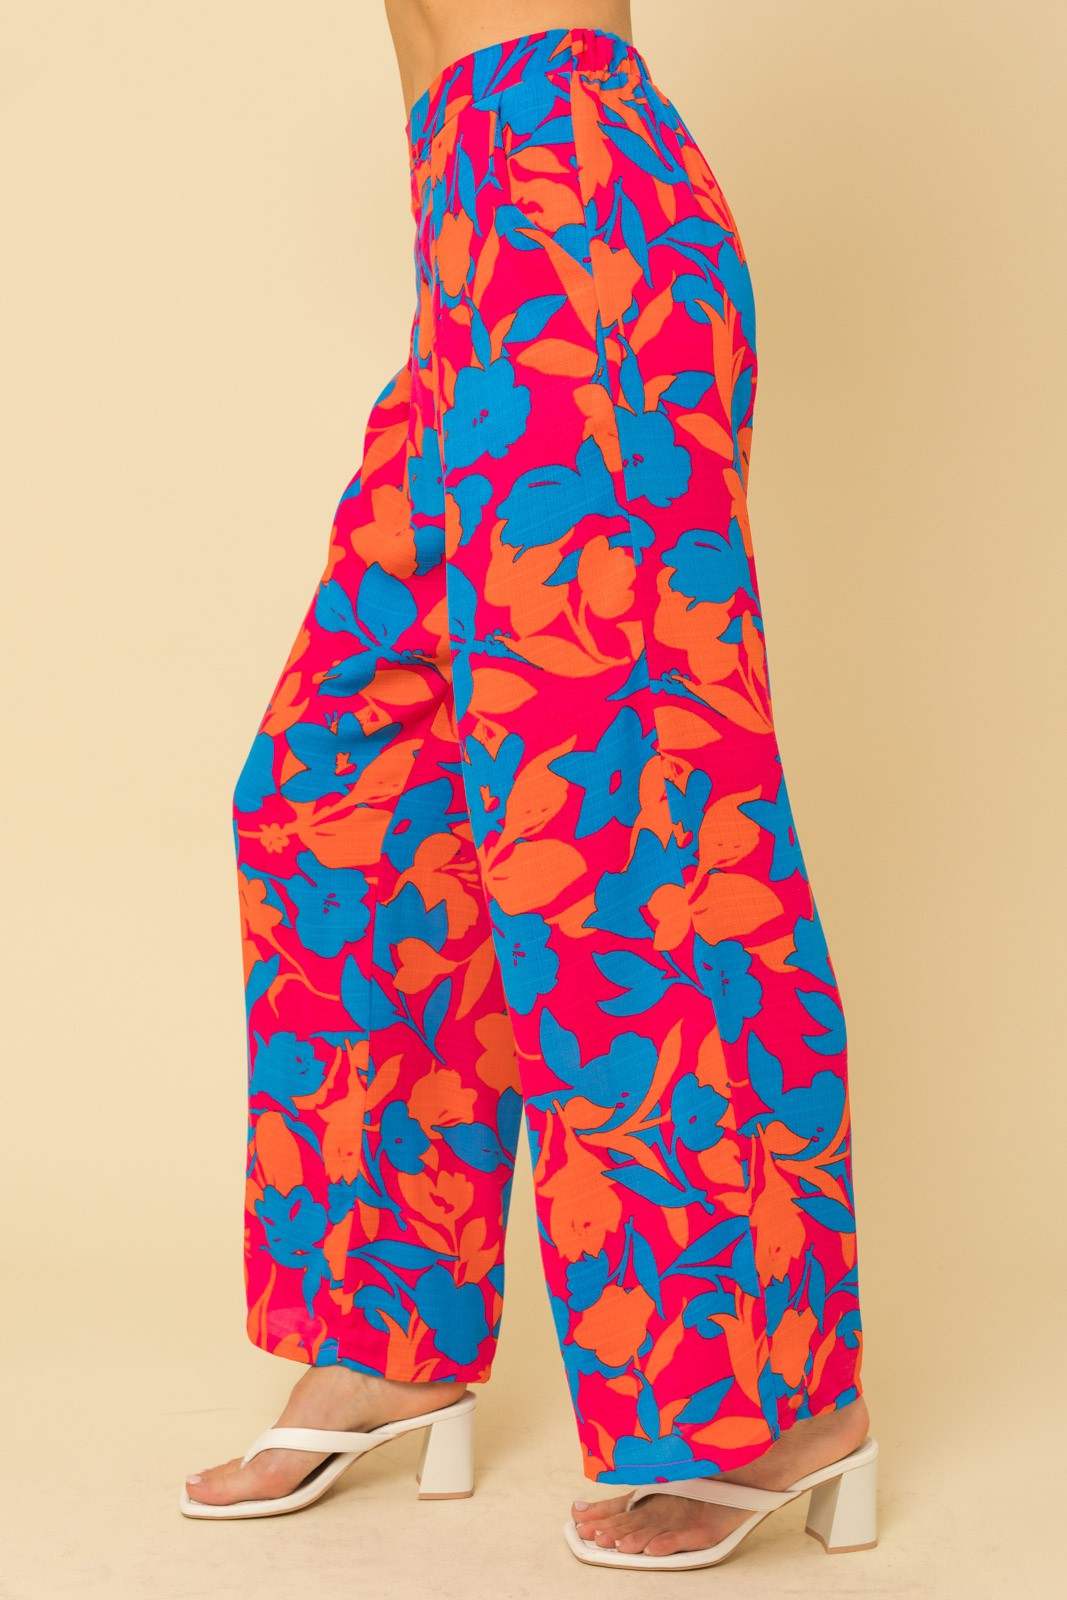 Floral Cami Top & Elastic Pleated Pants Set